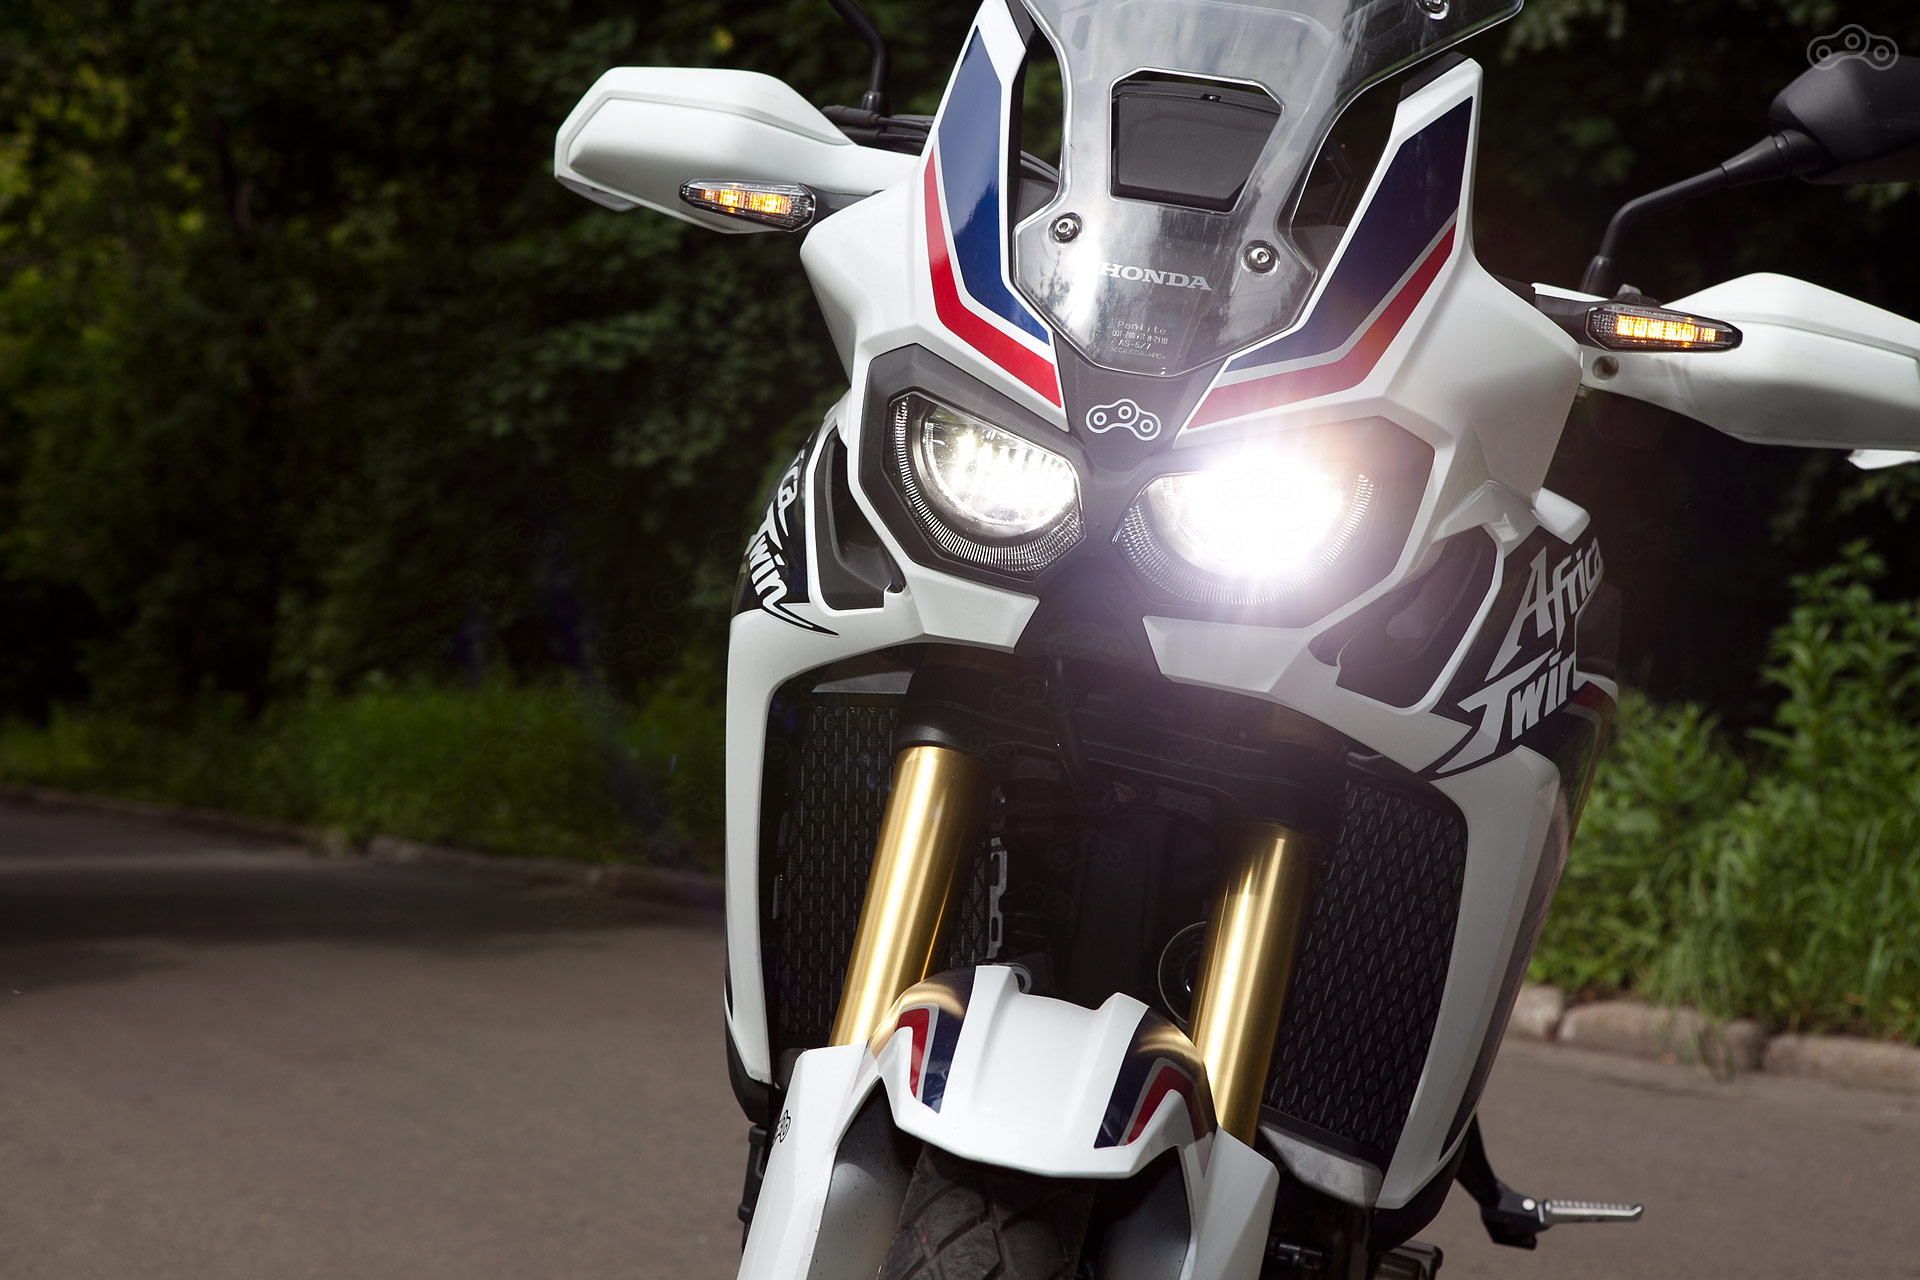 Журнал Омоймот провел тест-драйв нового мотоцикла Honda Africa Twin. 